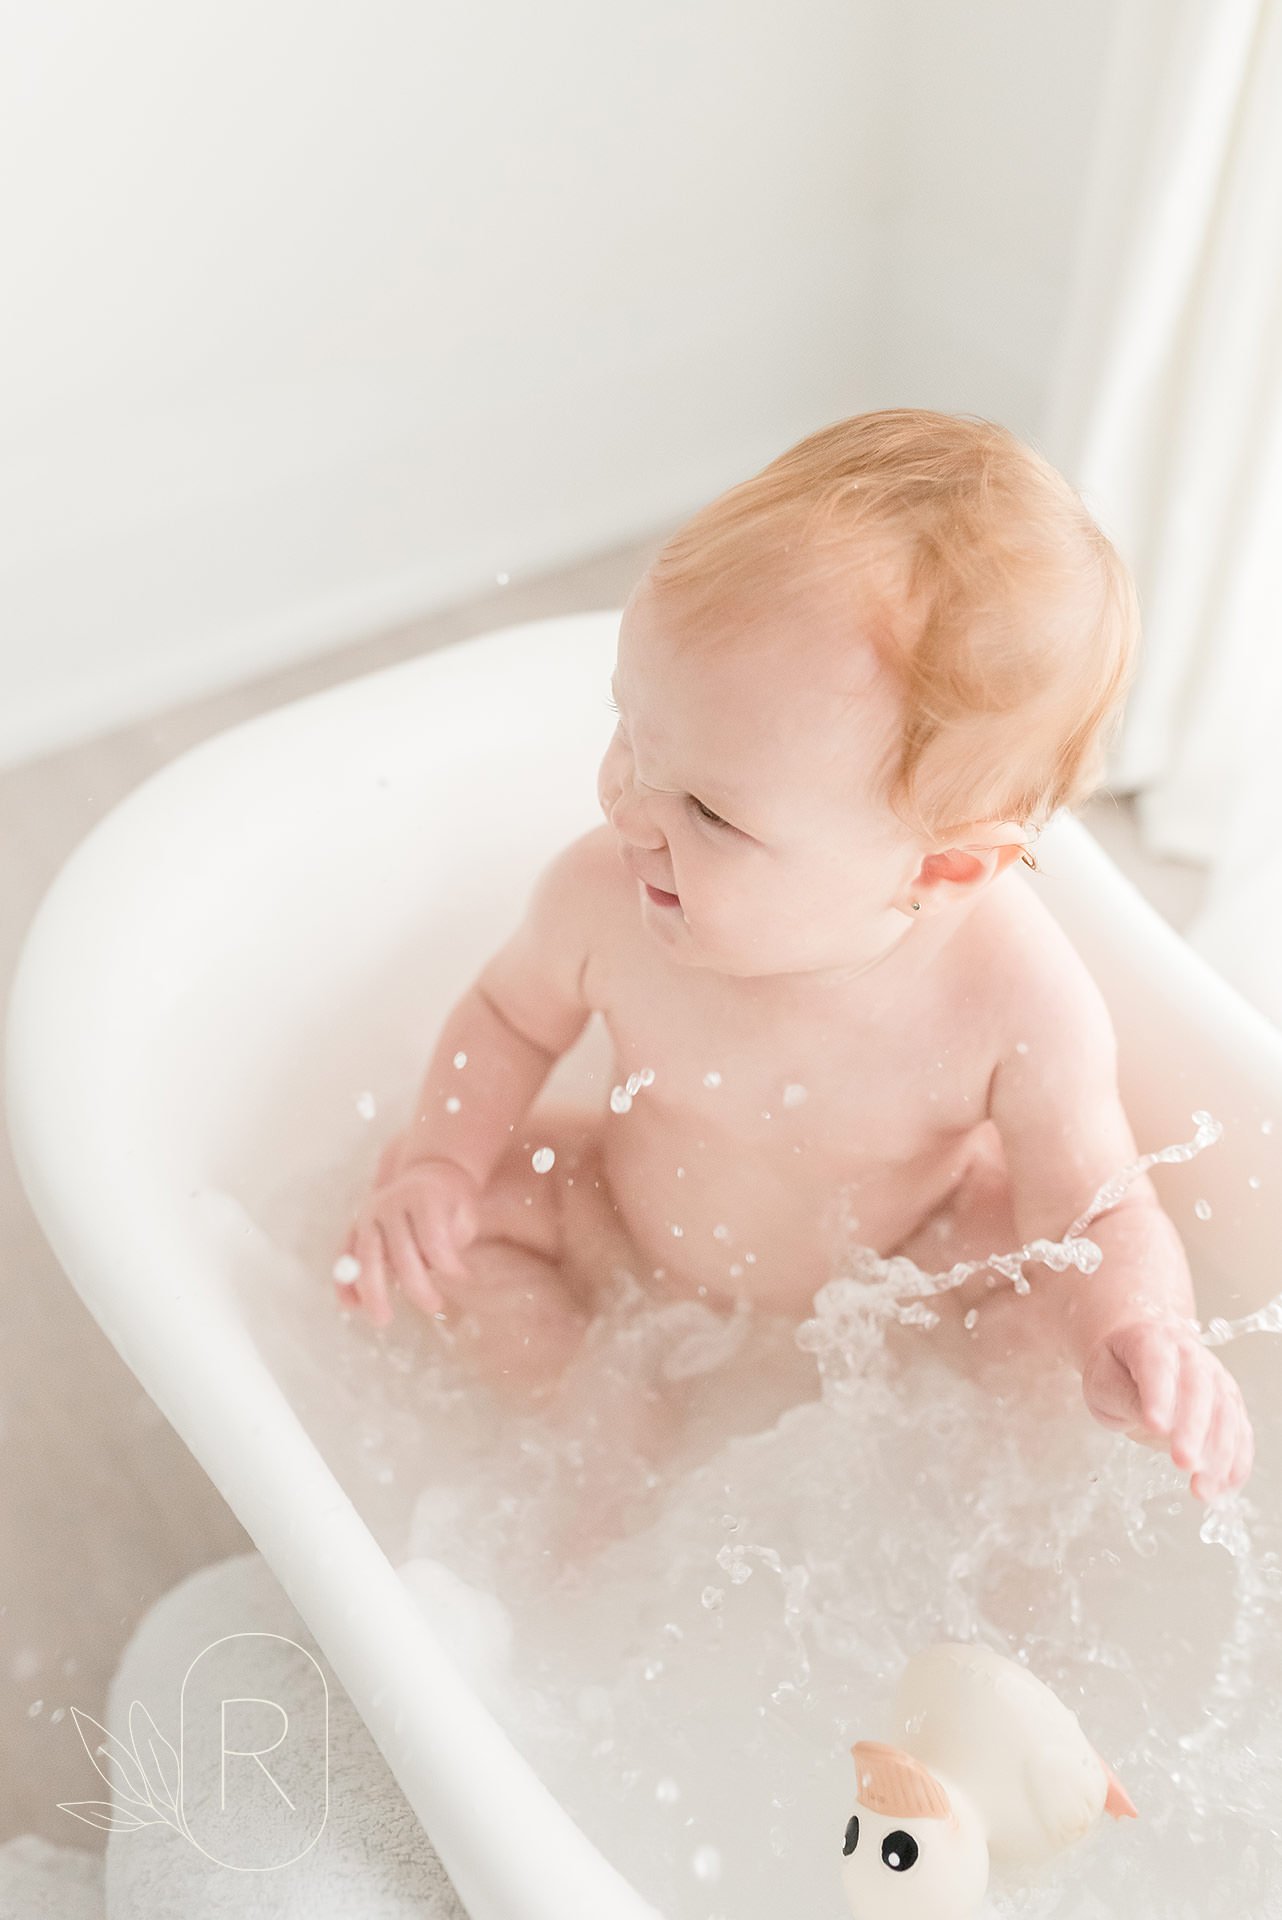 baby splashing in bath tub